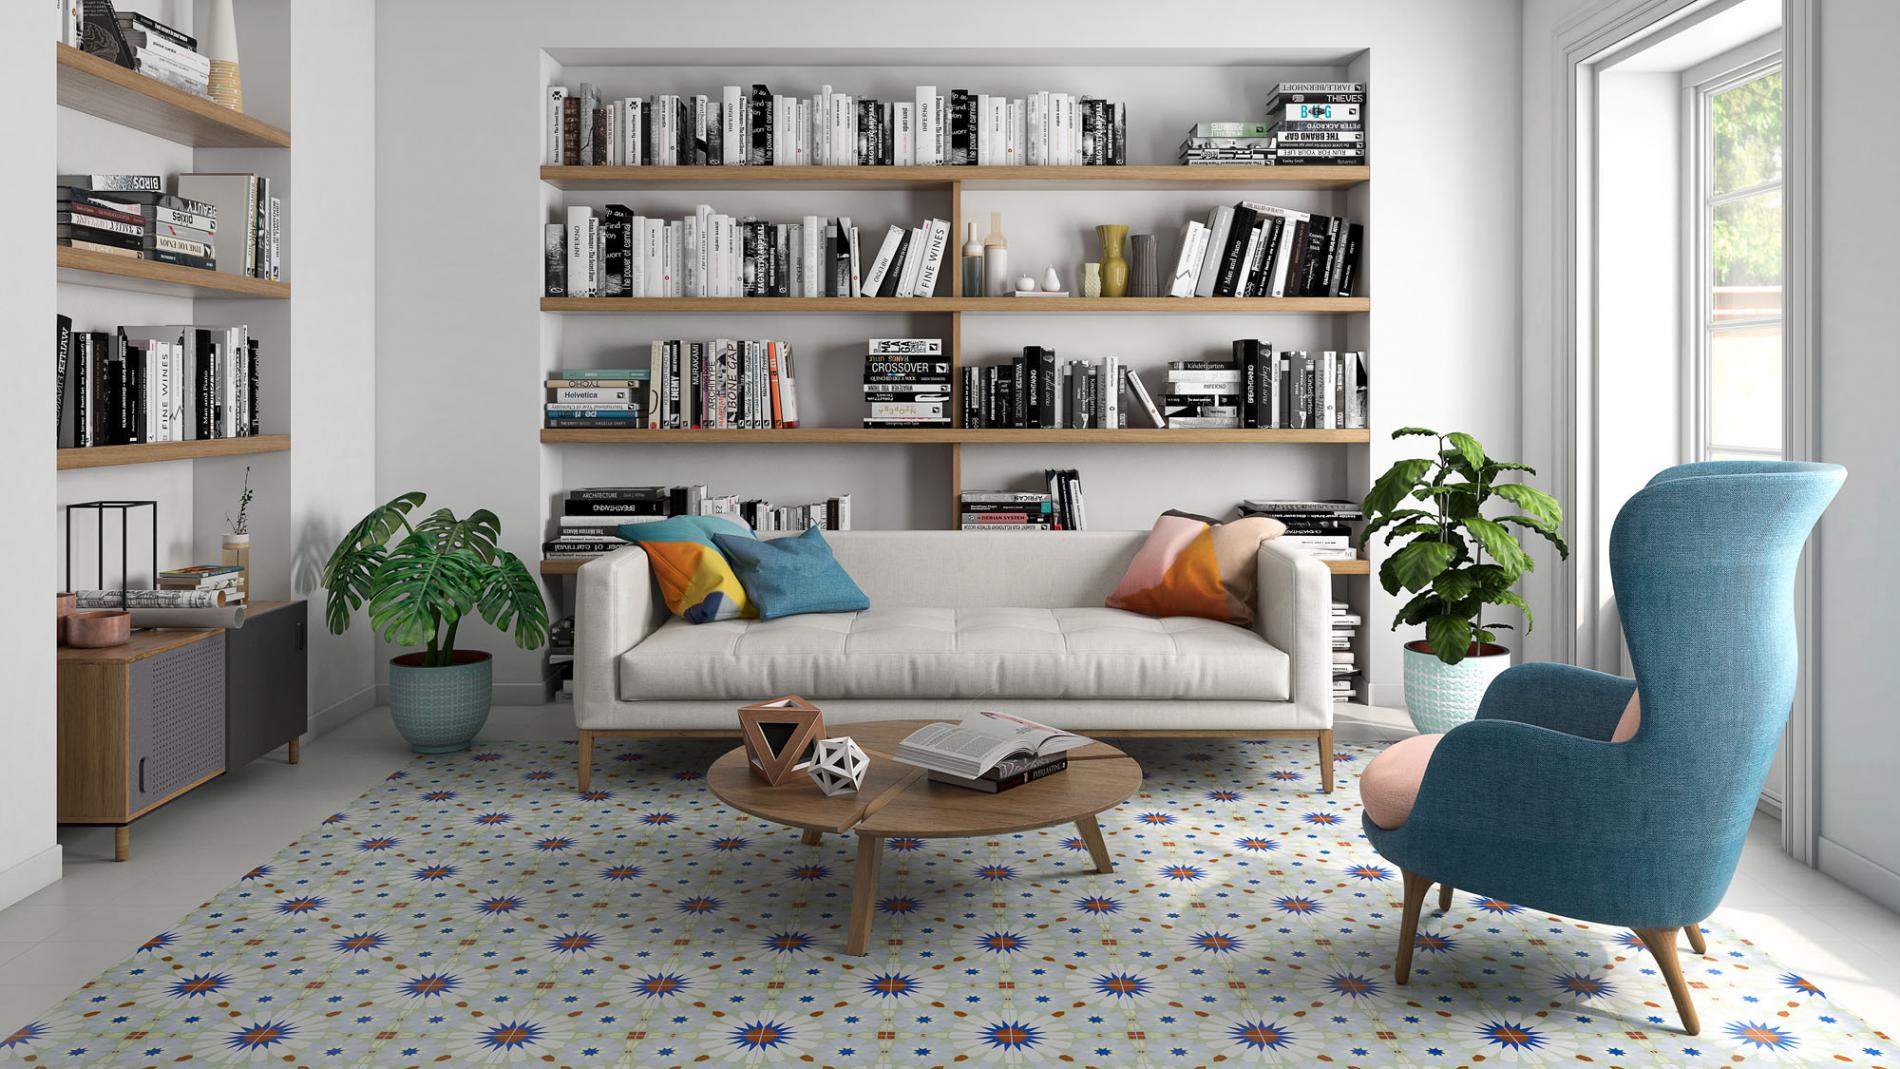 Art Cassatt tiles featured on living room floor